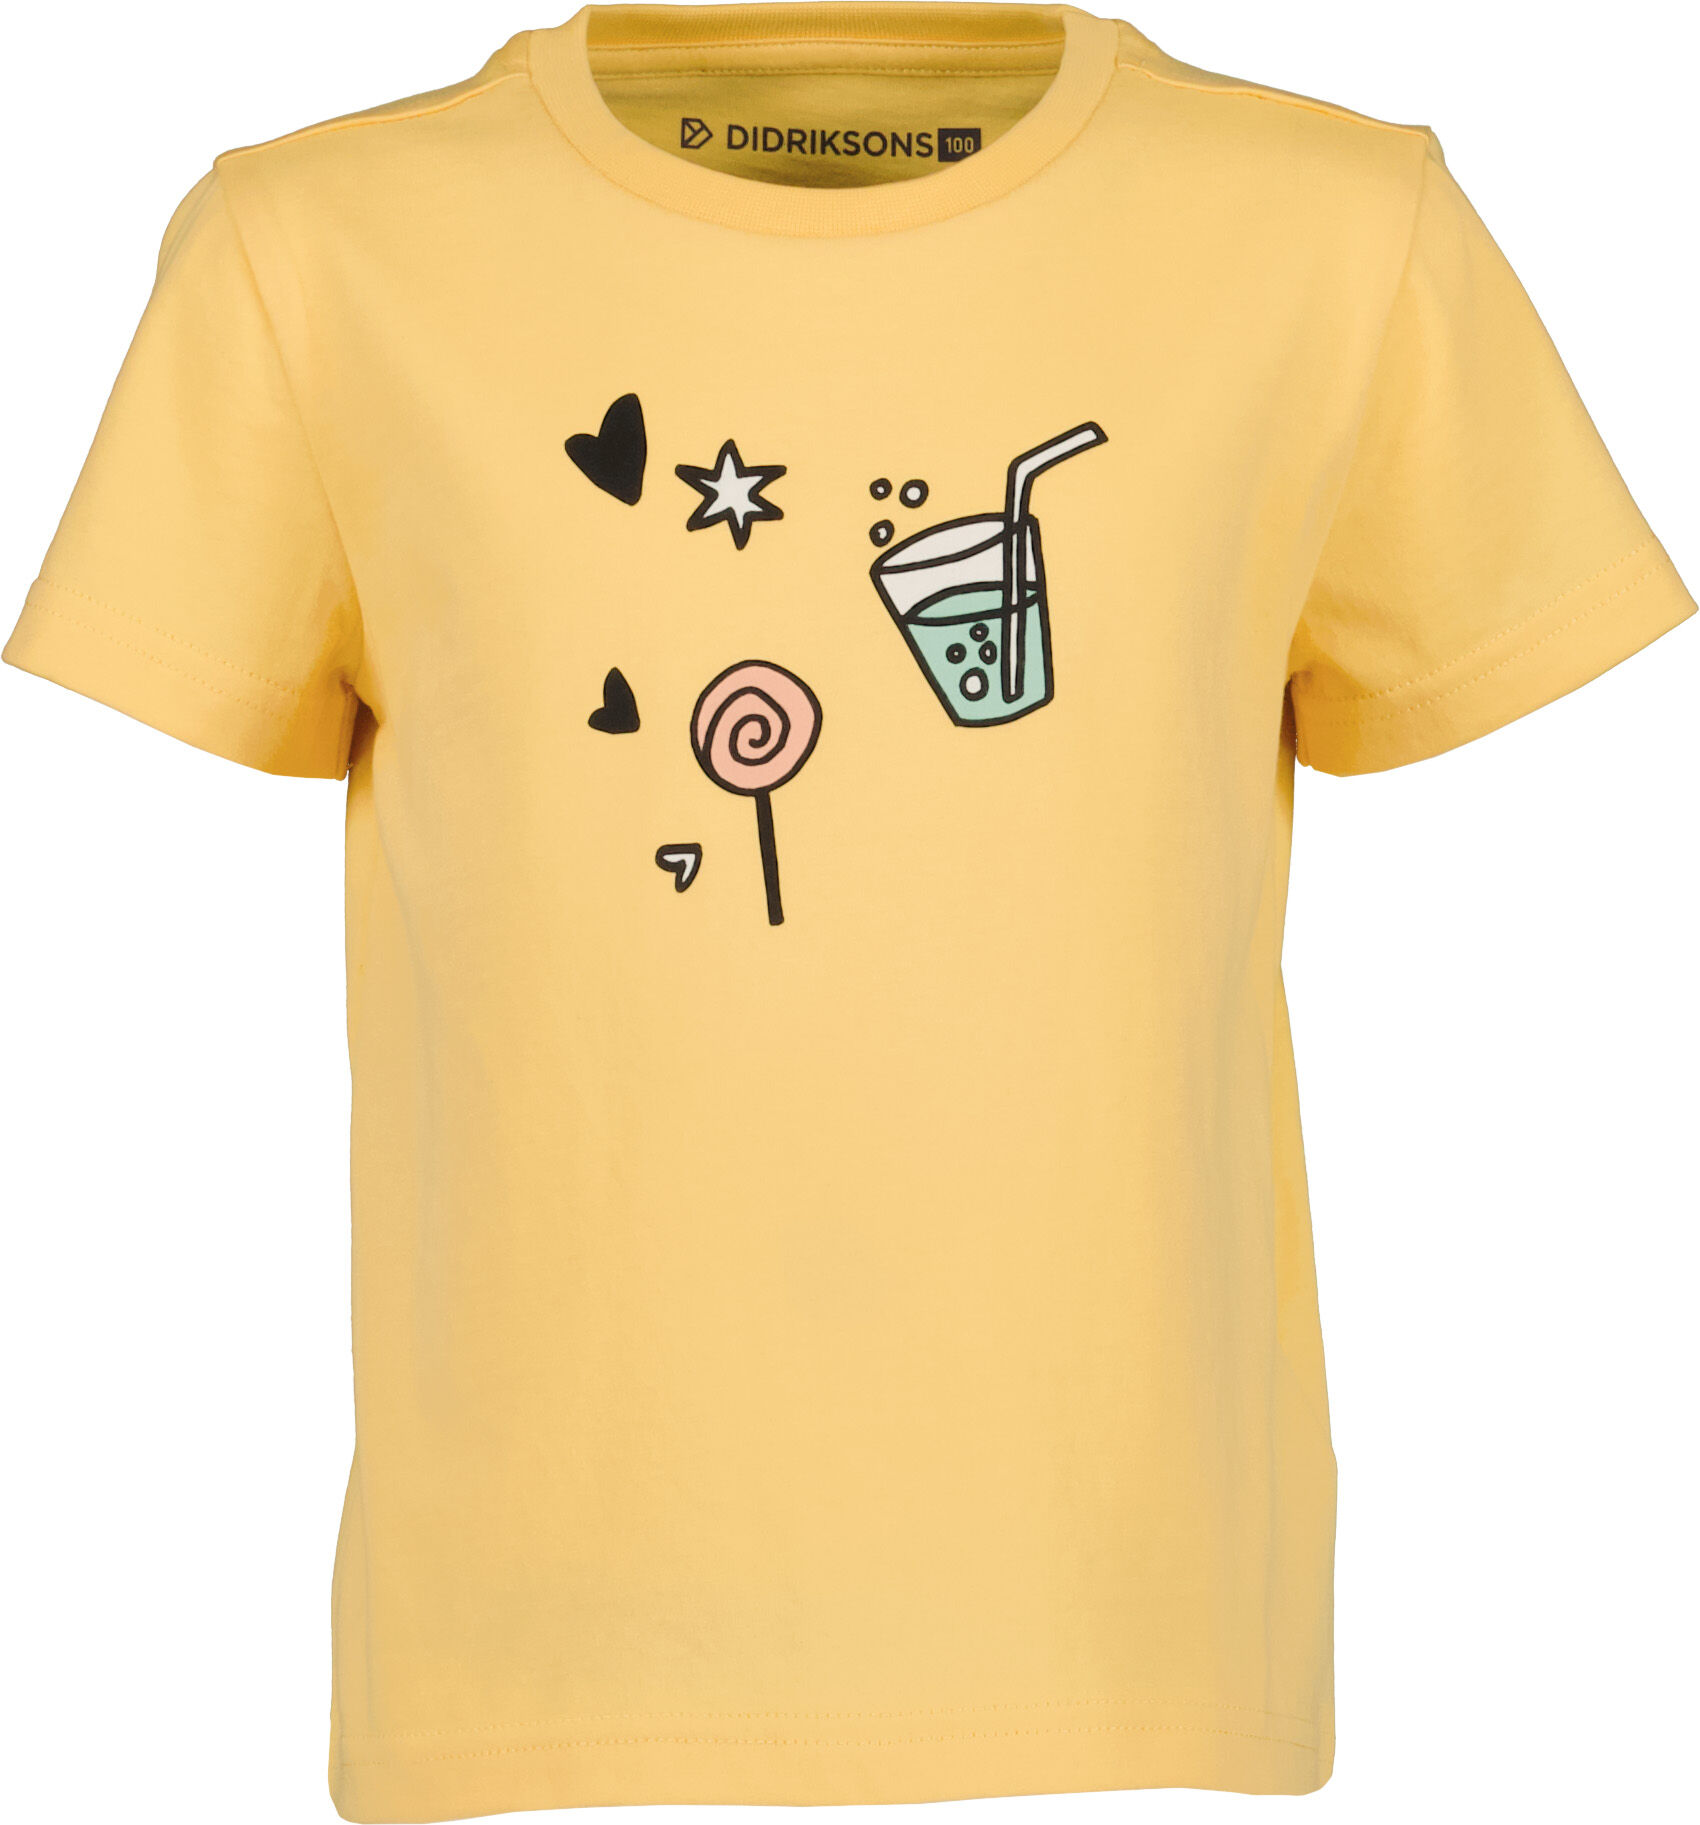 Didriksons Mynta T-shirt Creamy Yellow 130